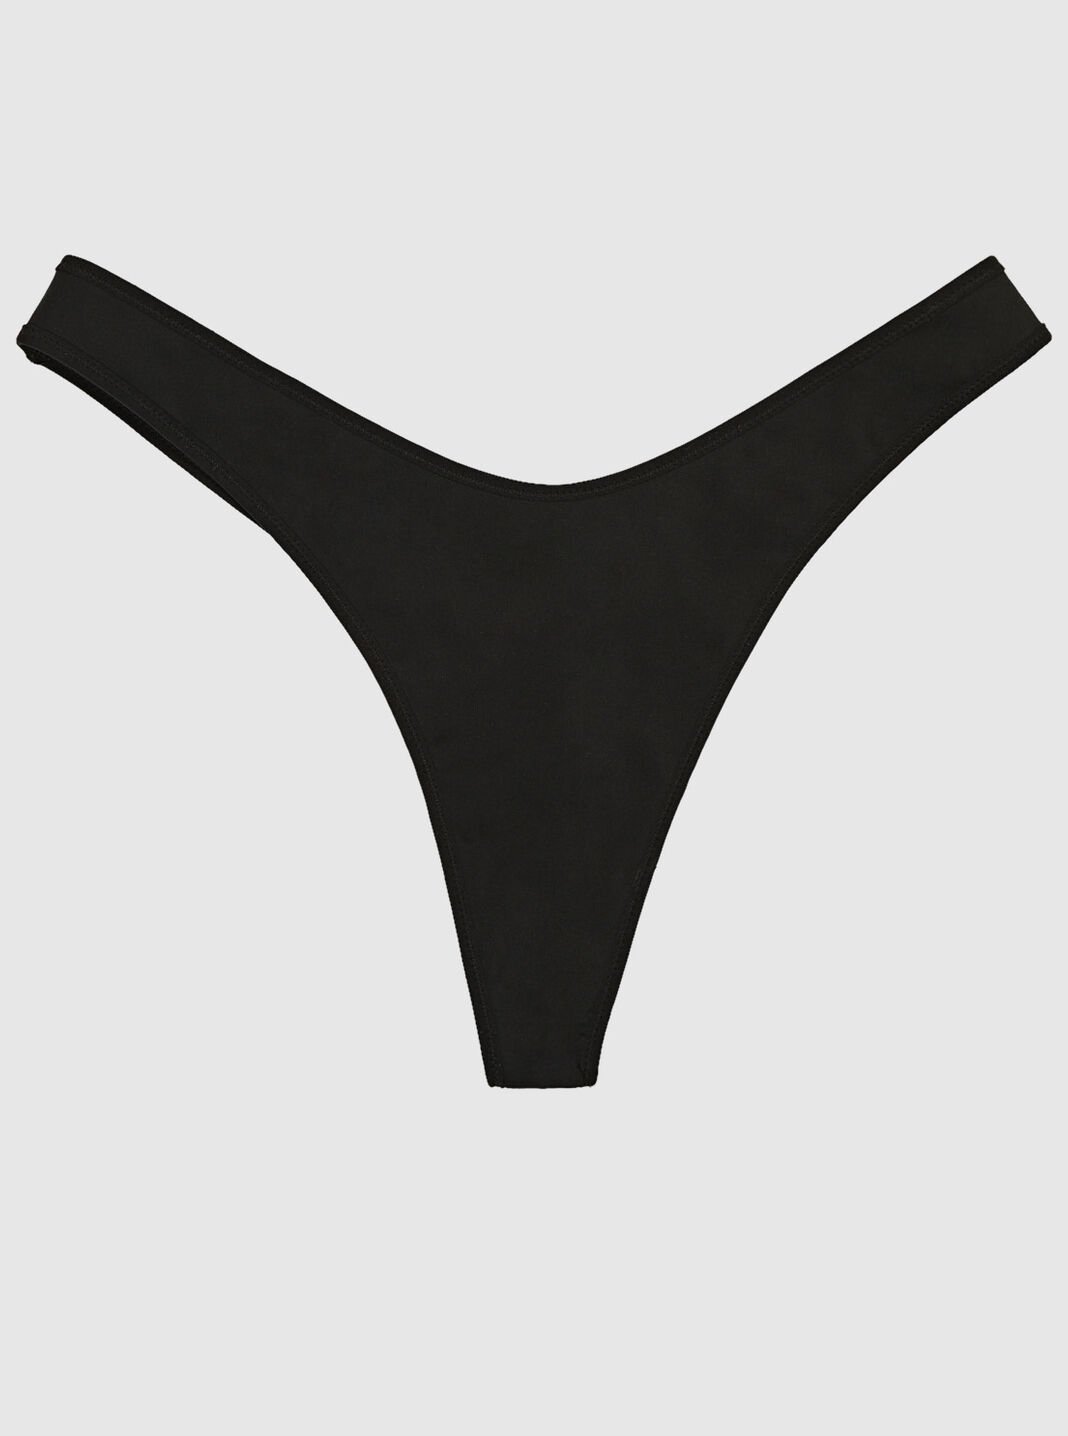 La Senza Body Panty Collection, Soft & Stretchy Panties, Contour Fit